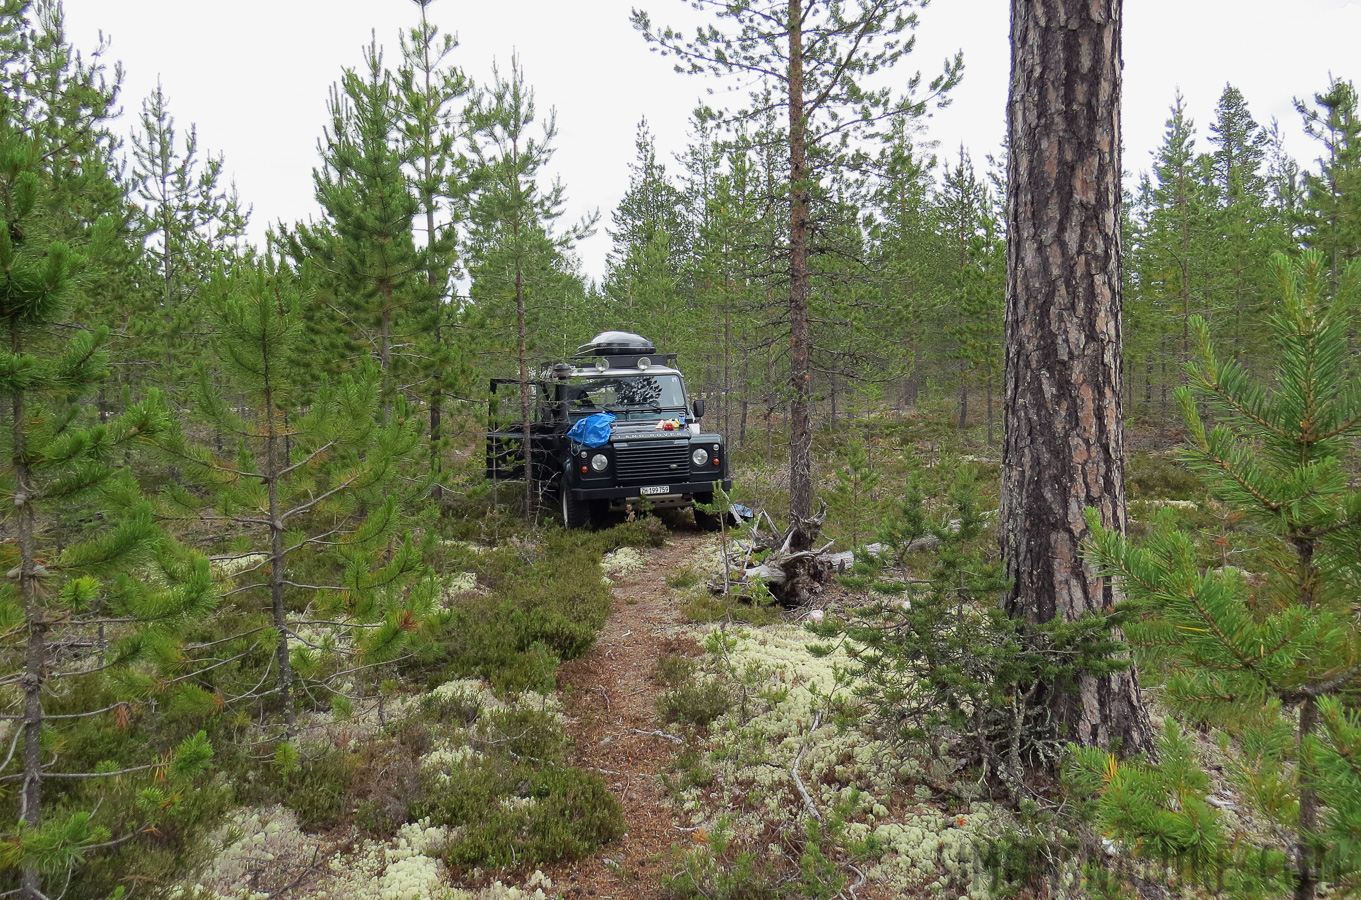 Schweden - Wilderness route [4.3 mm, 1/400 sec at f / 4.0, ISO 160]